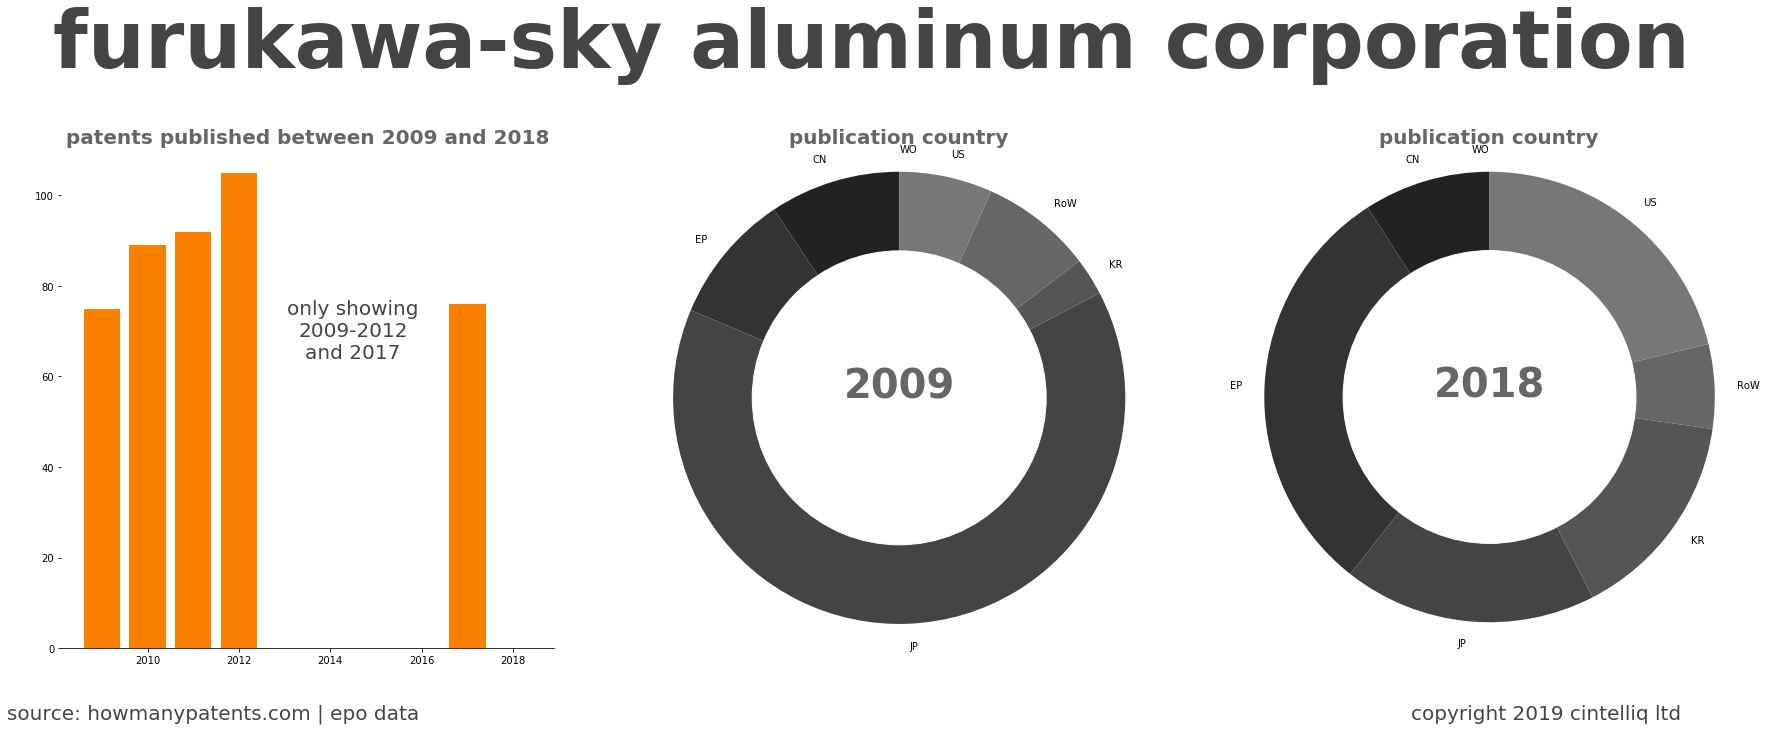 summary of patents for Furukawa-Sky Aluminum Corporation